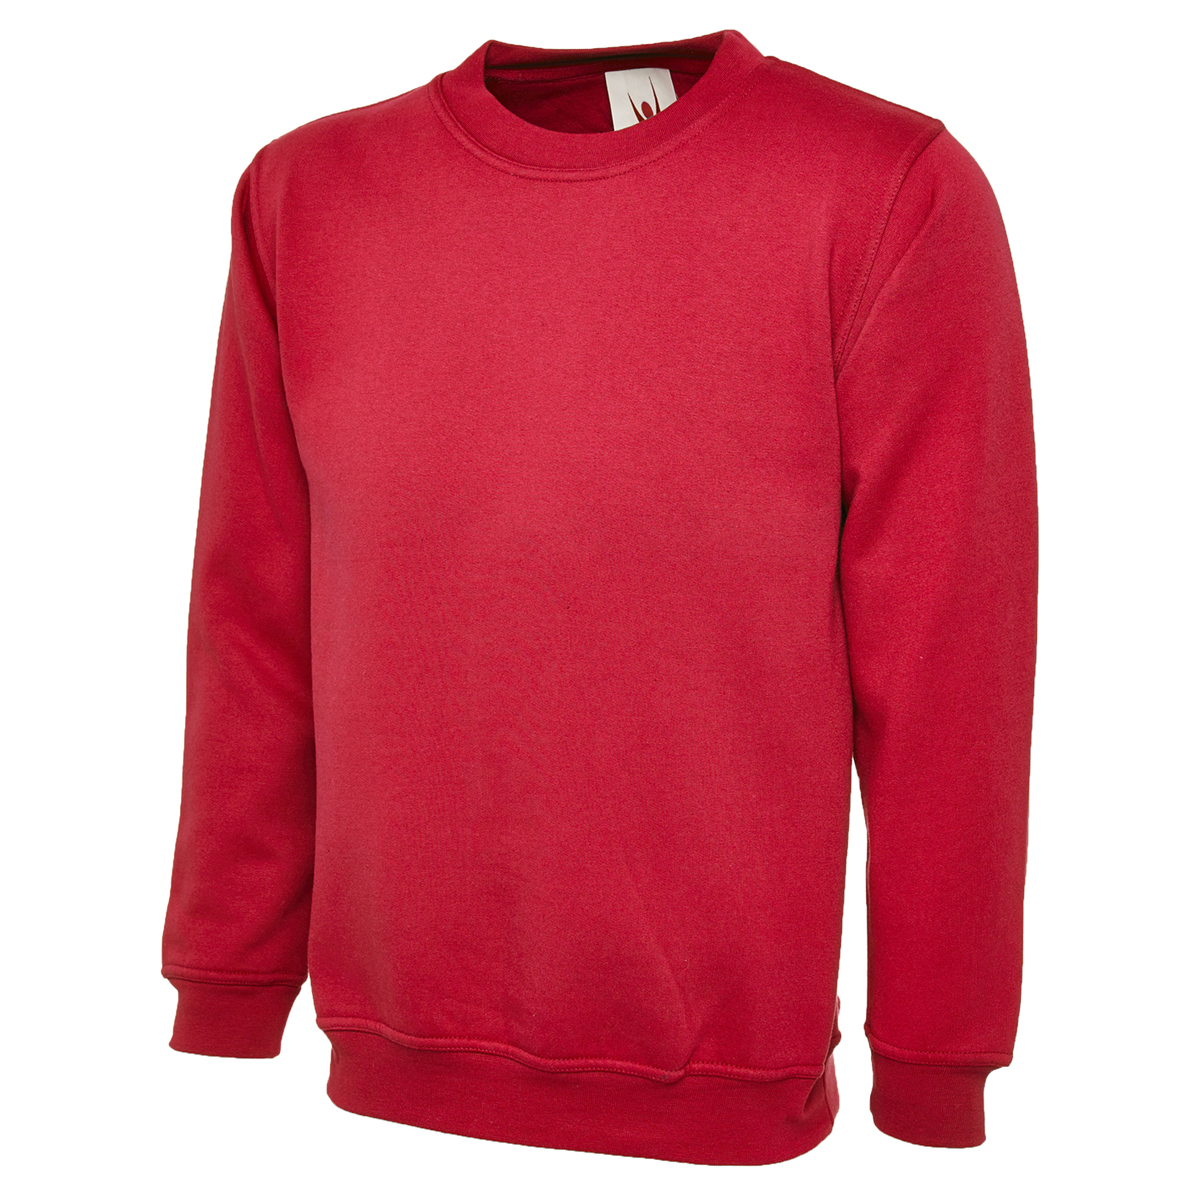 Uc203 300gsm classic sweatshirt - red - 3xl